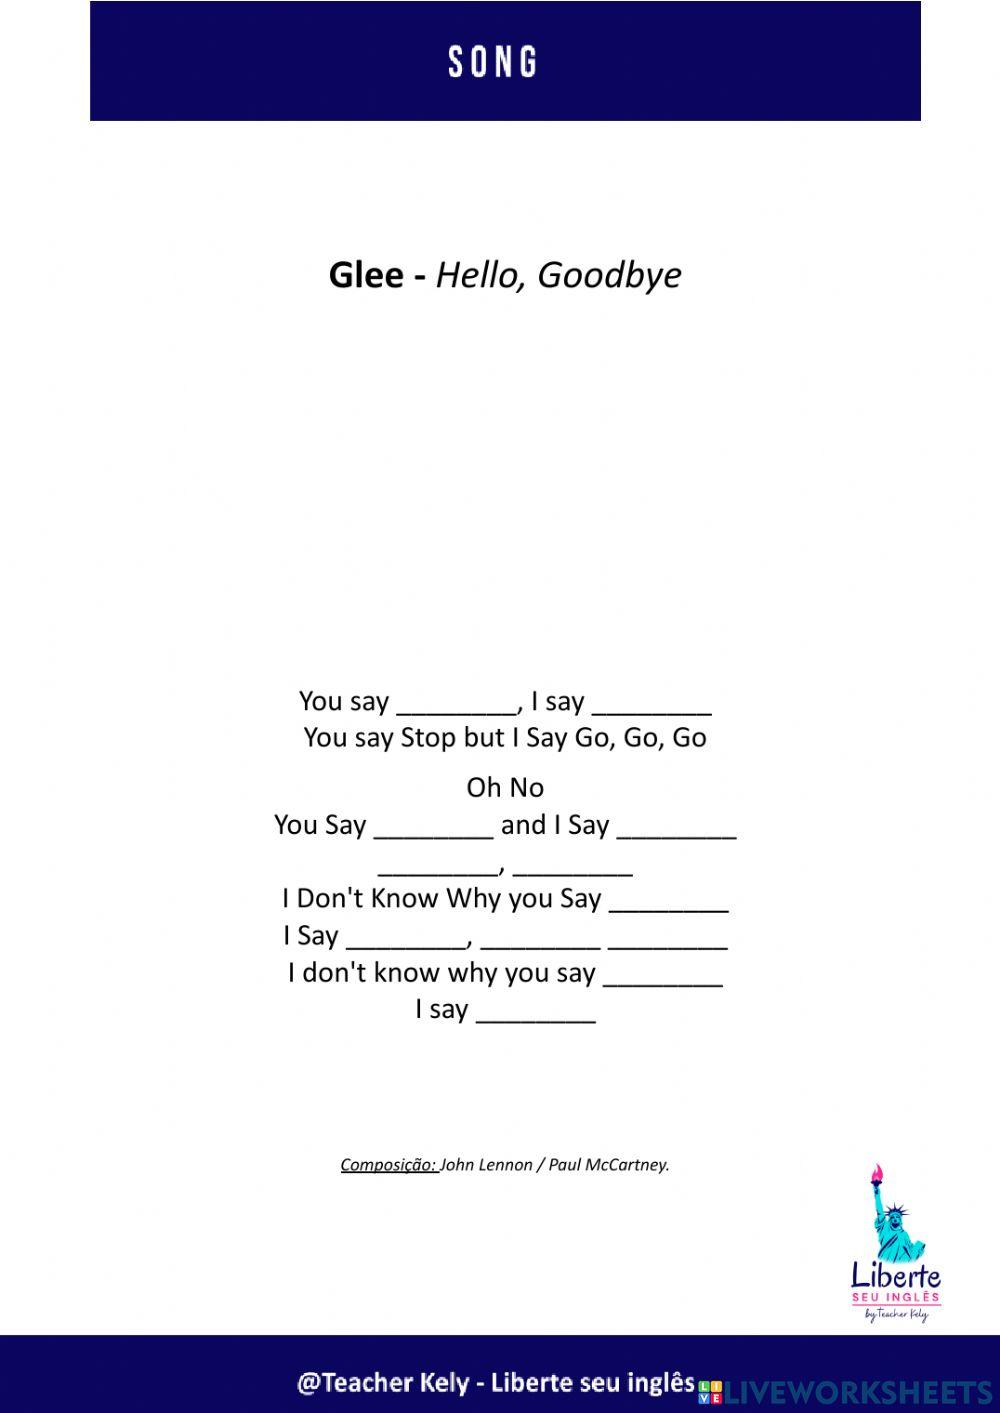 SONG-Hello,Goodbye